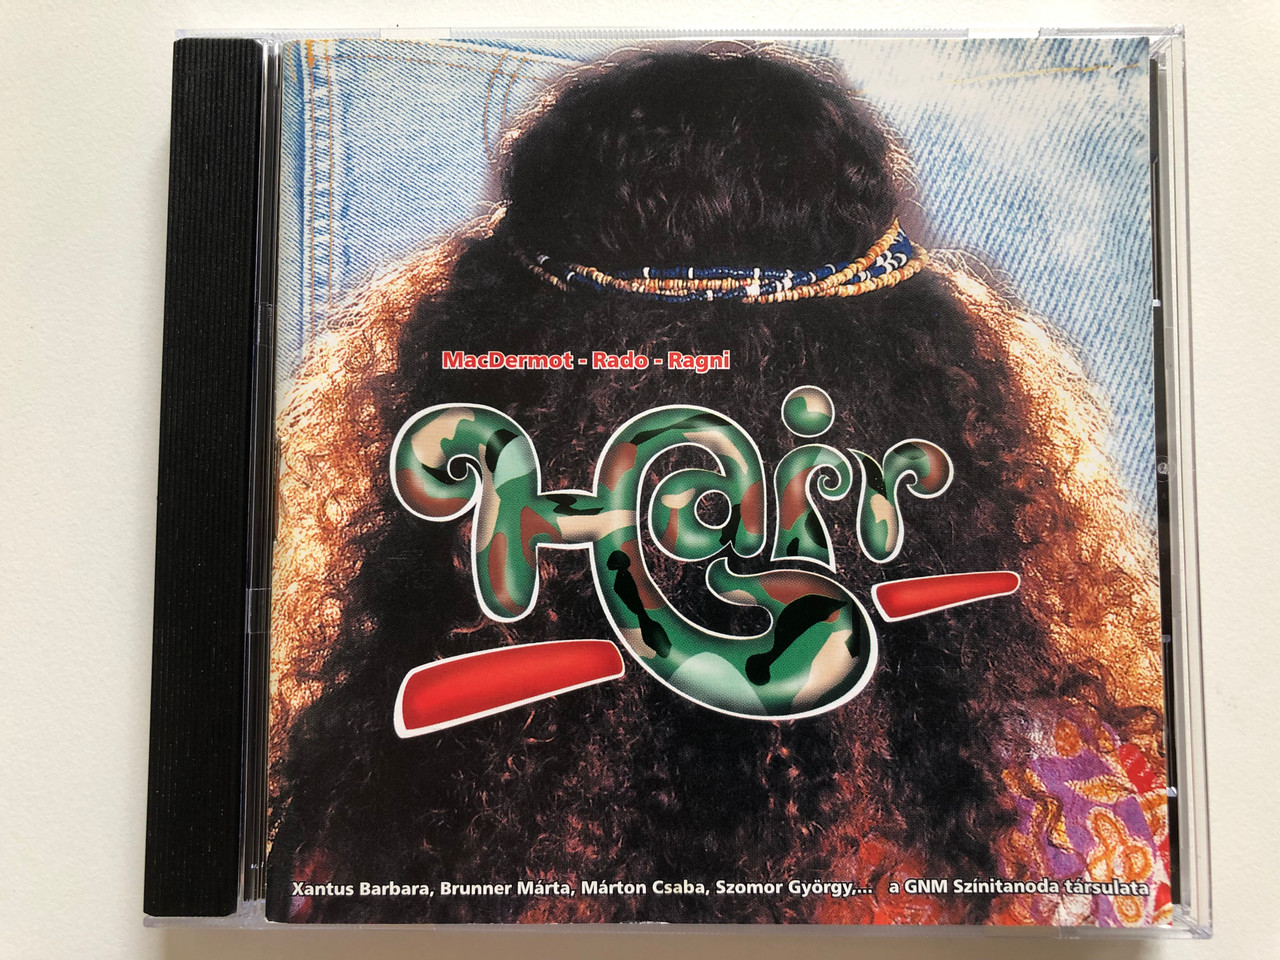 MacDermot-Rado-Ragni - Hair / Xantus Barbara, Brunner Marta, Marton Csaba,  Szomor Gyorgy,... a GNM Szintanoda tarsulata / 3T Audio CD 1996 / 533 304-2  - bibleinmylanguage